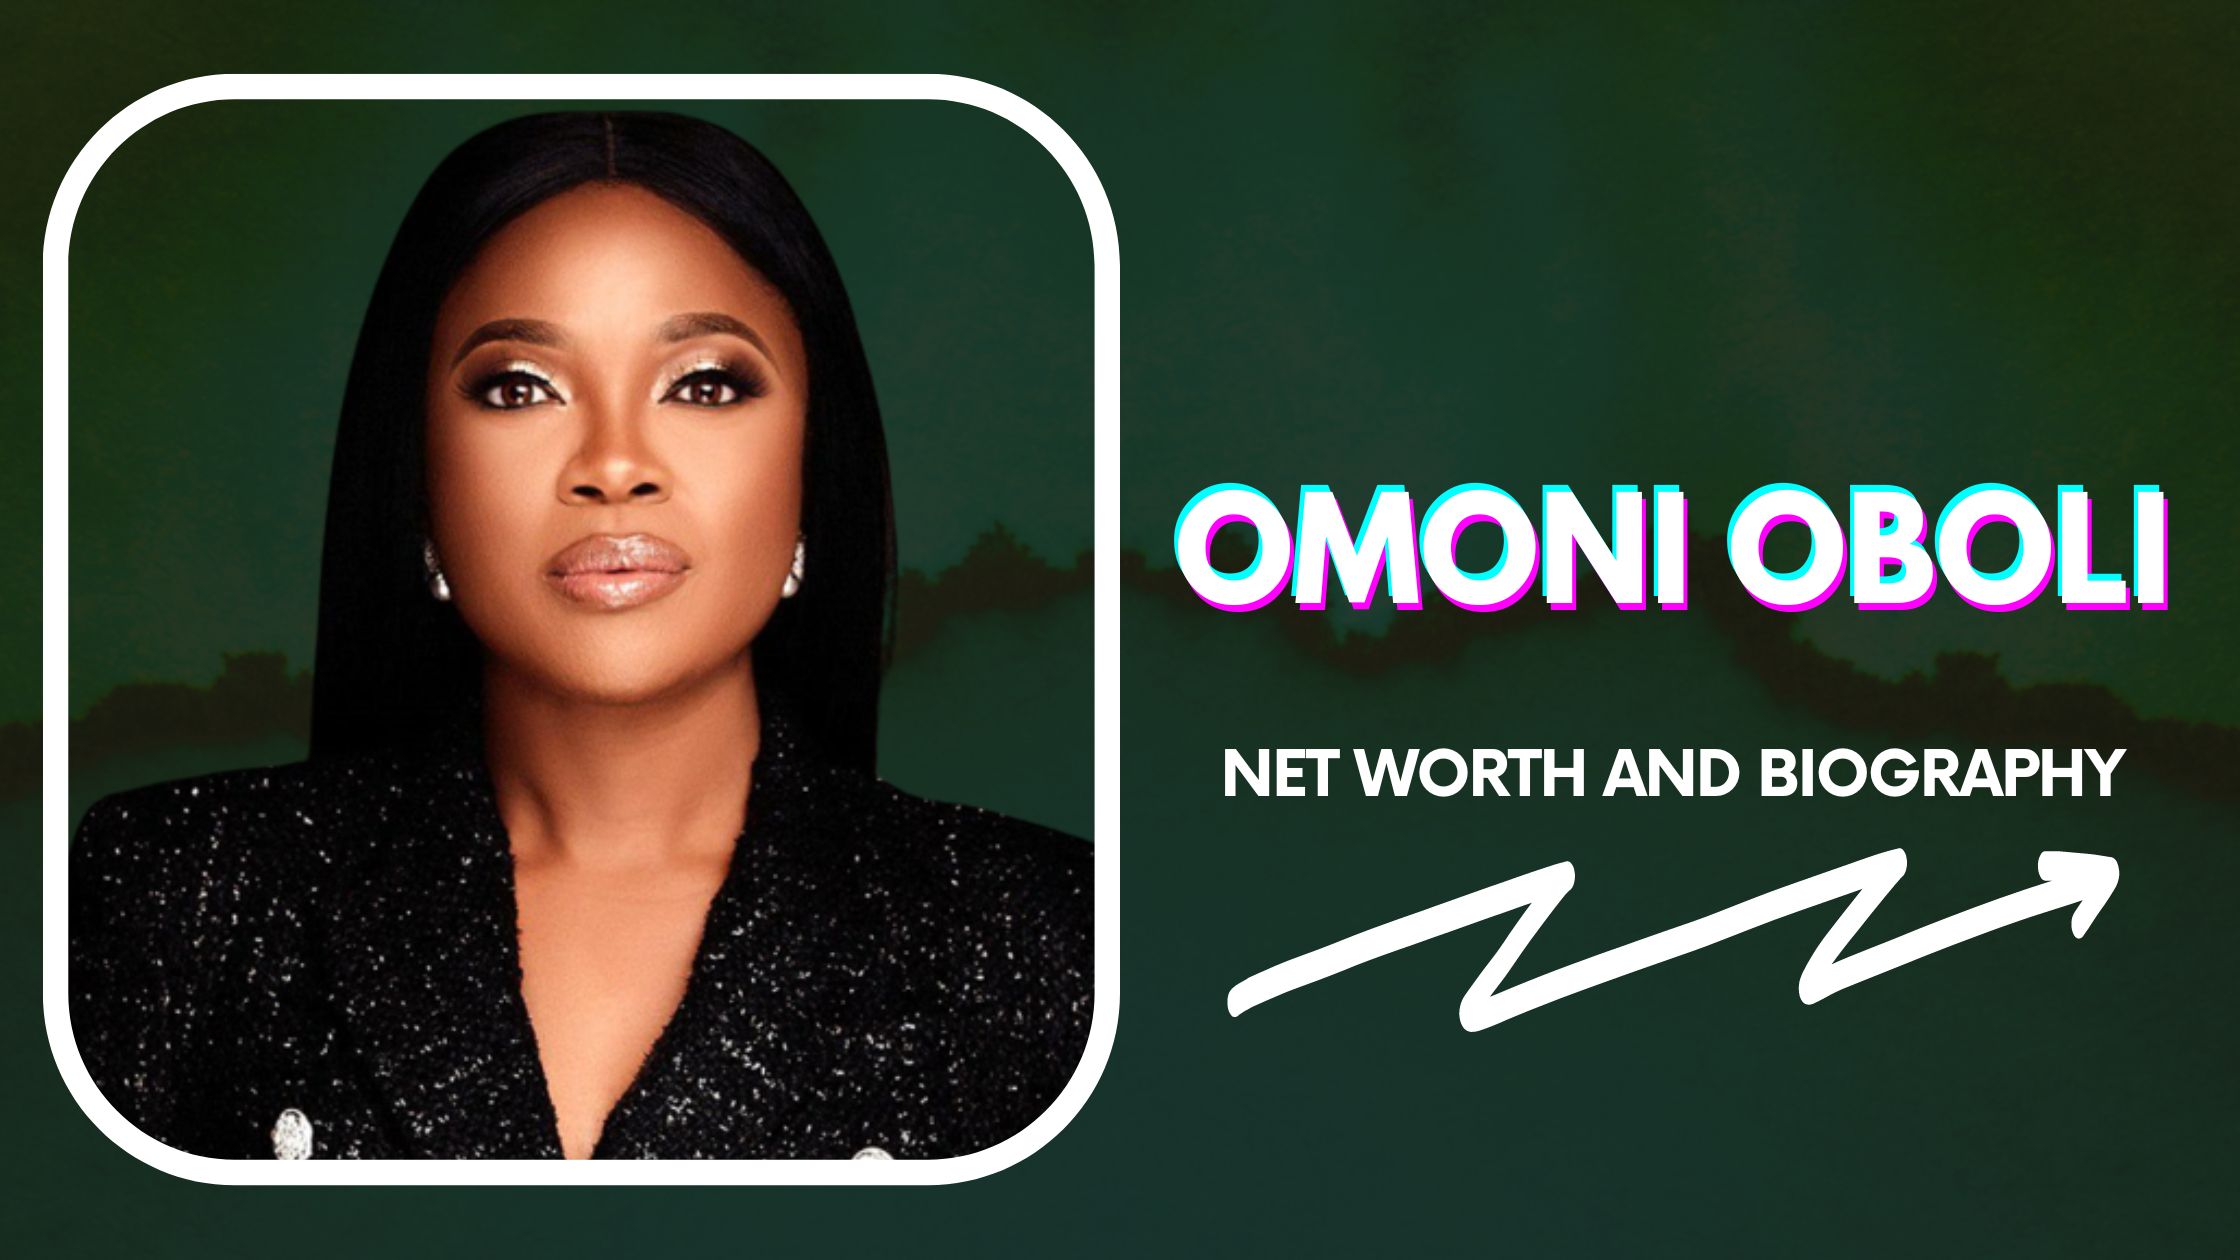 Omoni Oboli Net Worth, Biography, Husband, Children, Awards